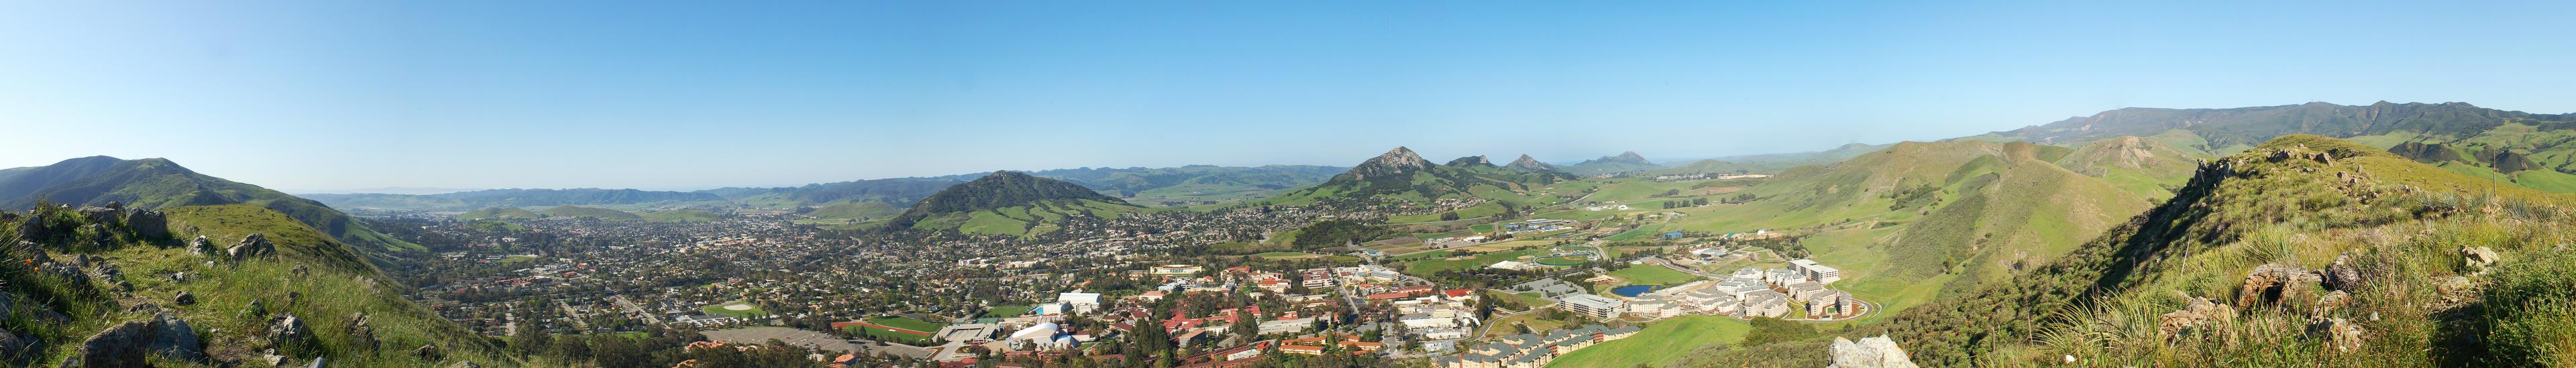 Banner image for San Luis Obispo on GigsGuide